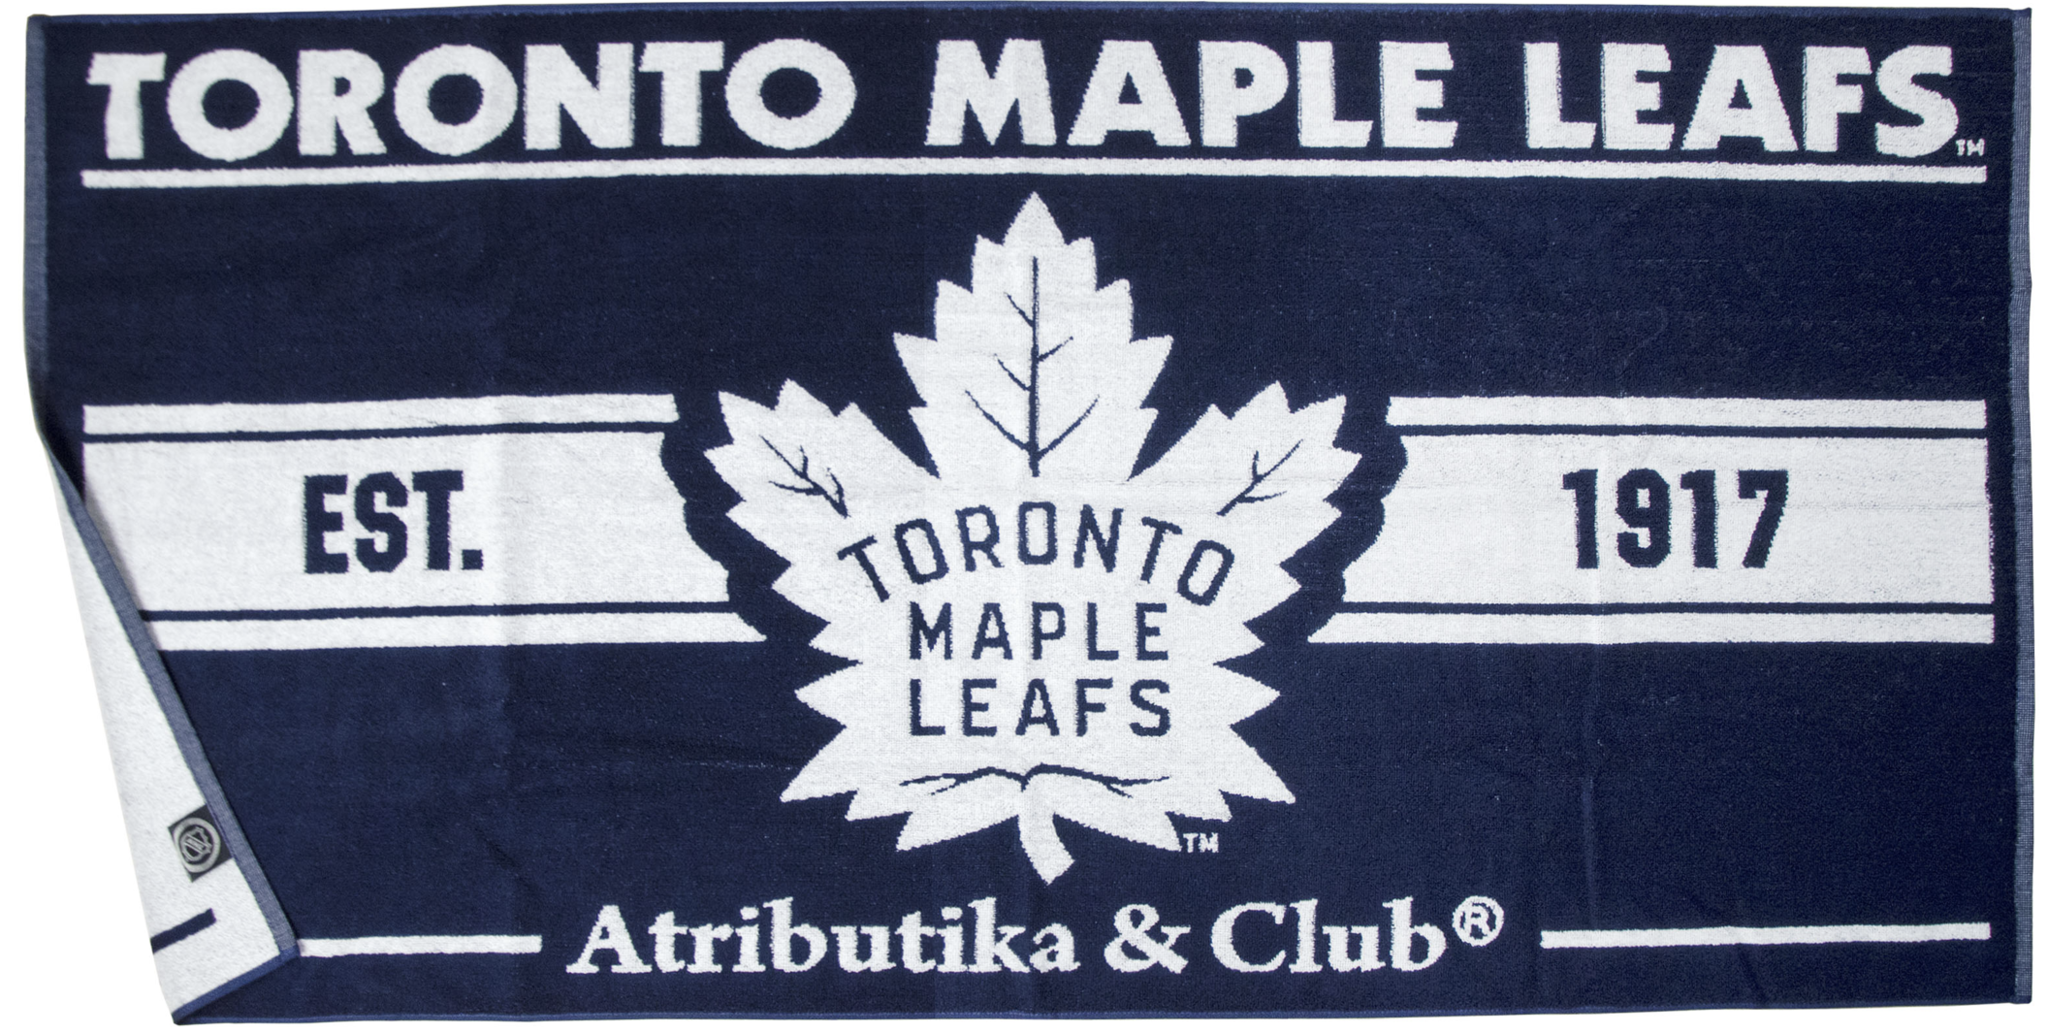 Полотенце NHL Toronto Maple Leafs est. 1917